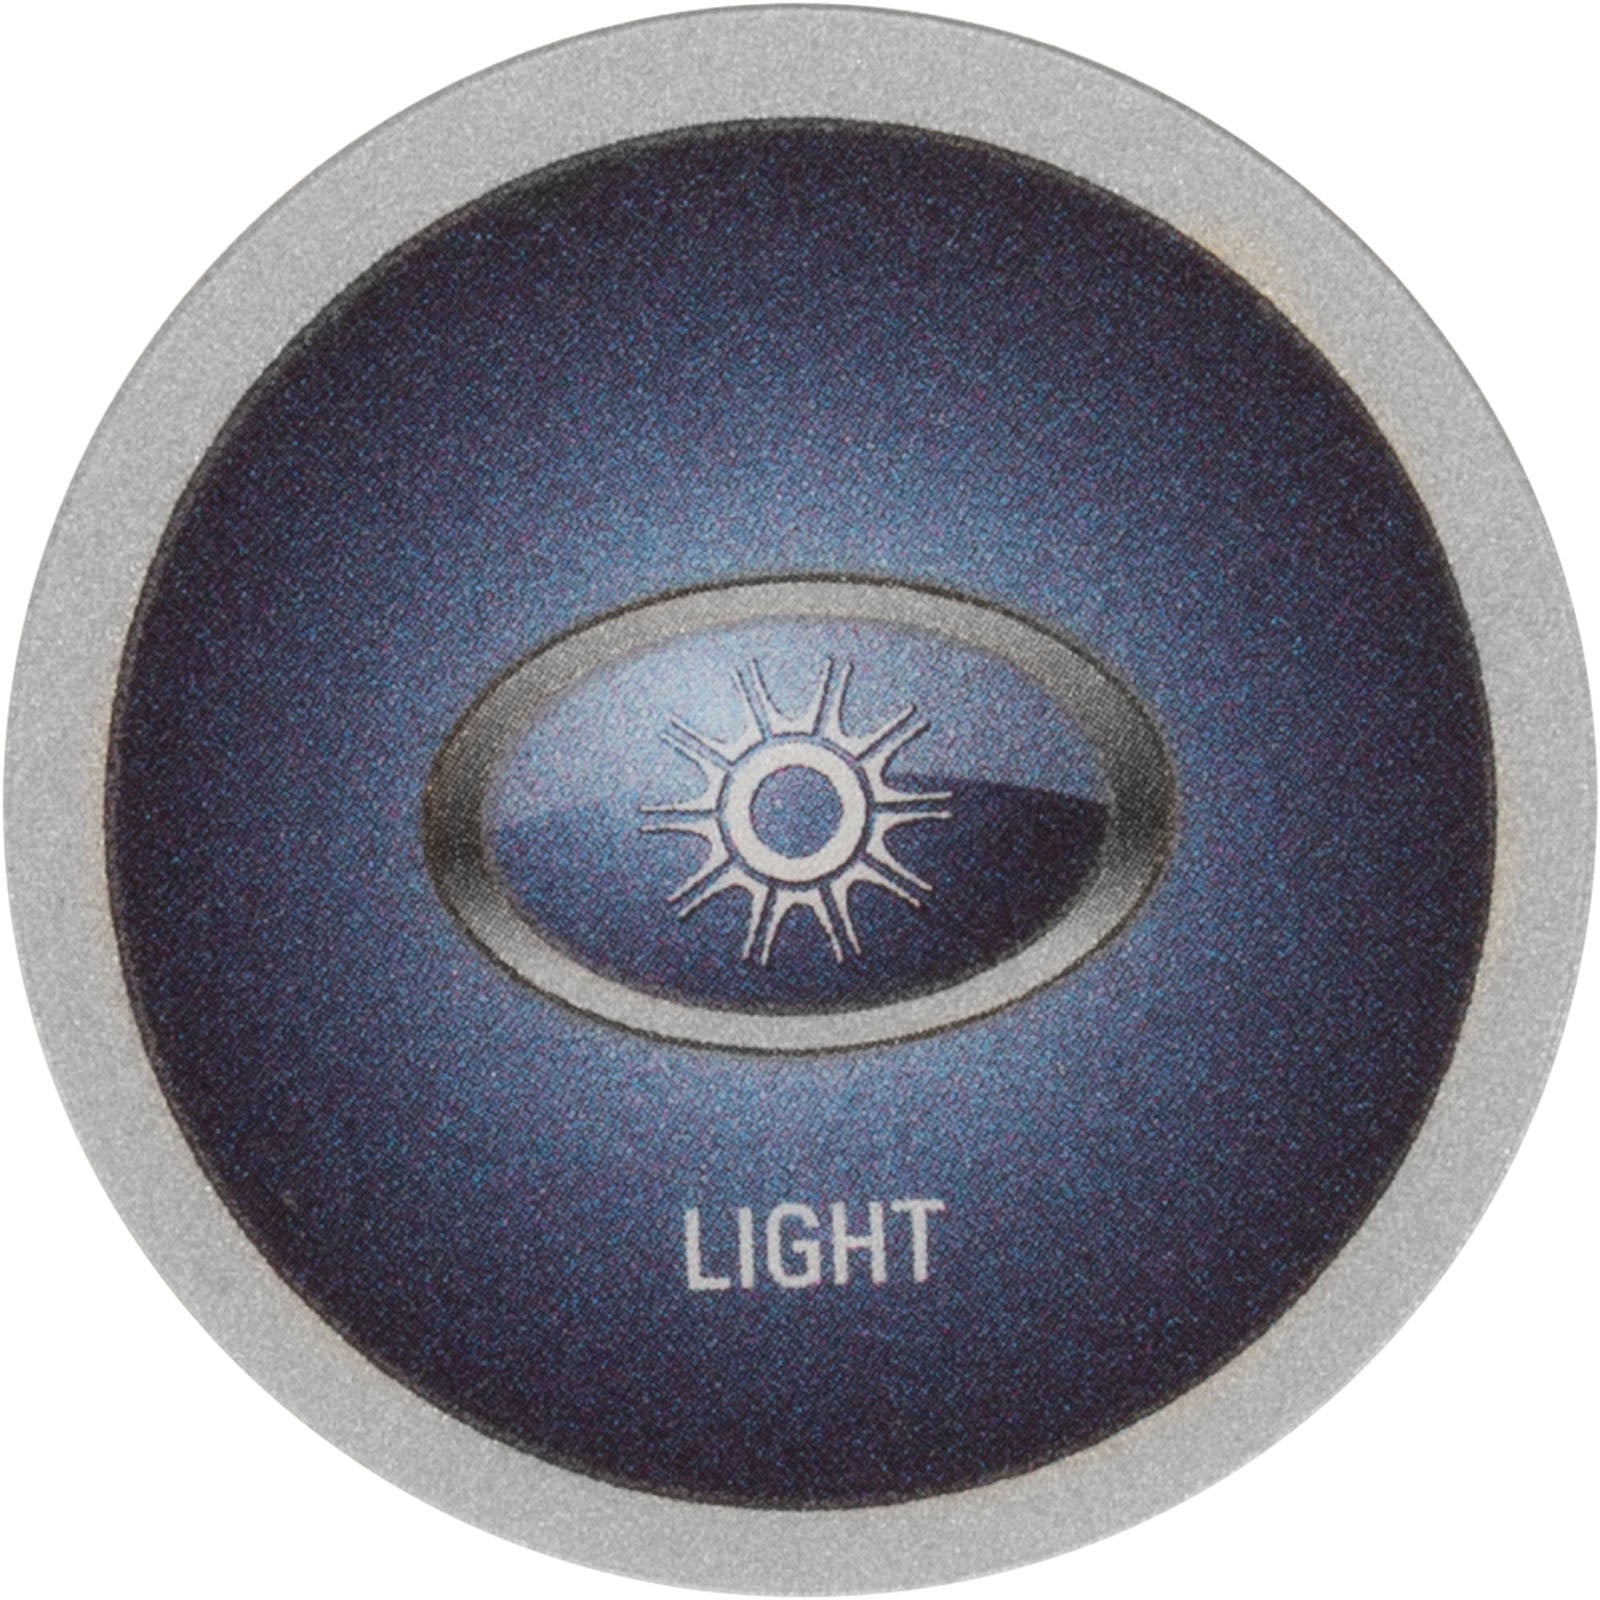 Balboa 1-Button AX10 Topside Panel Overlay [Light] (40108)